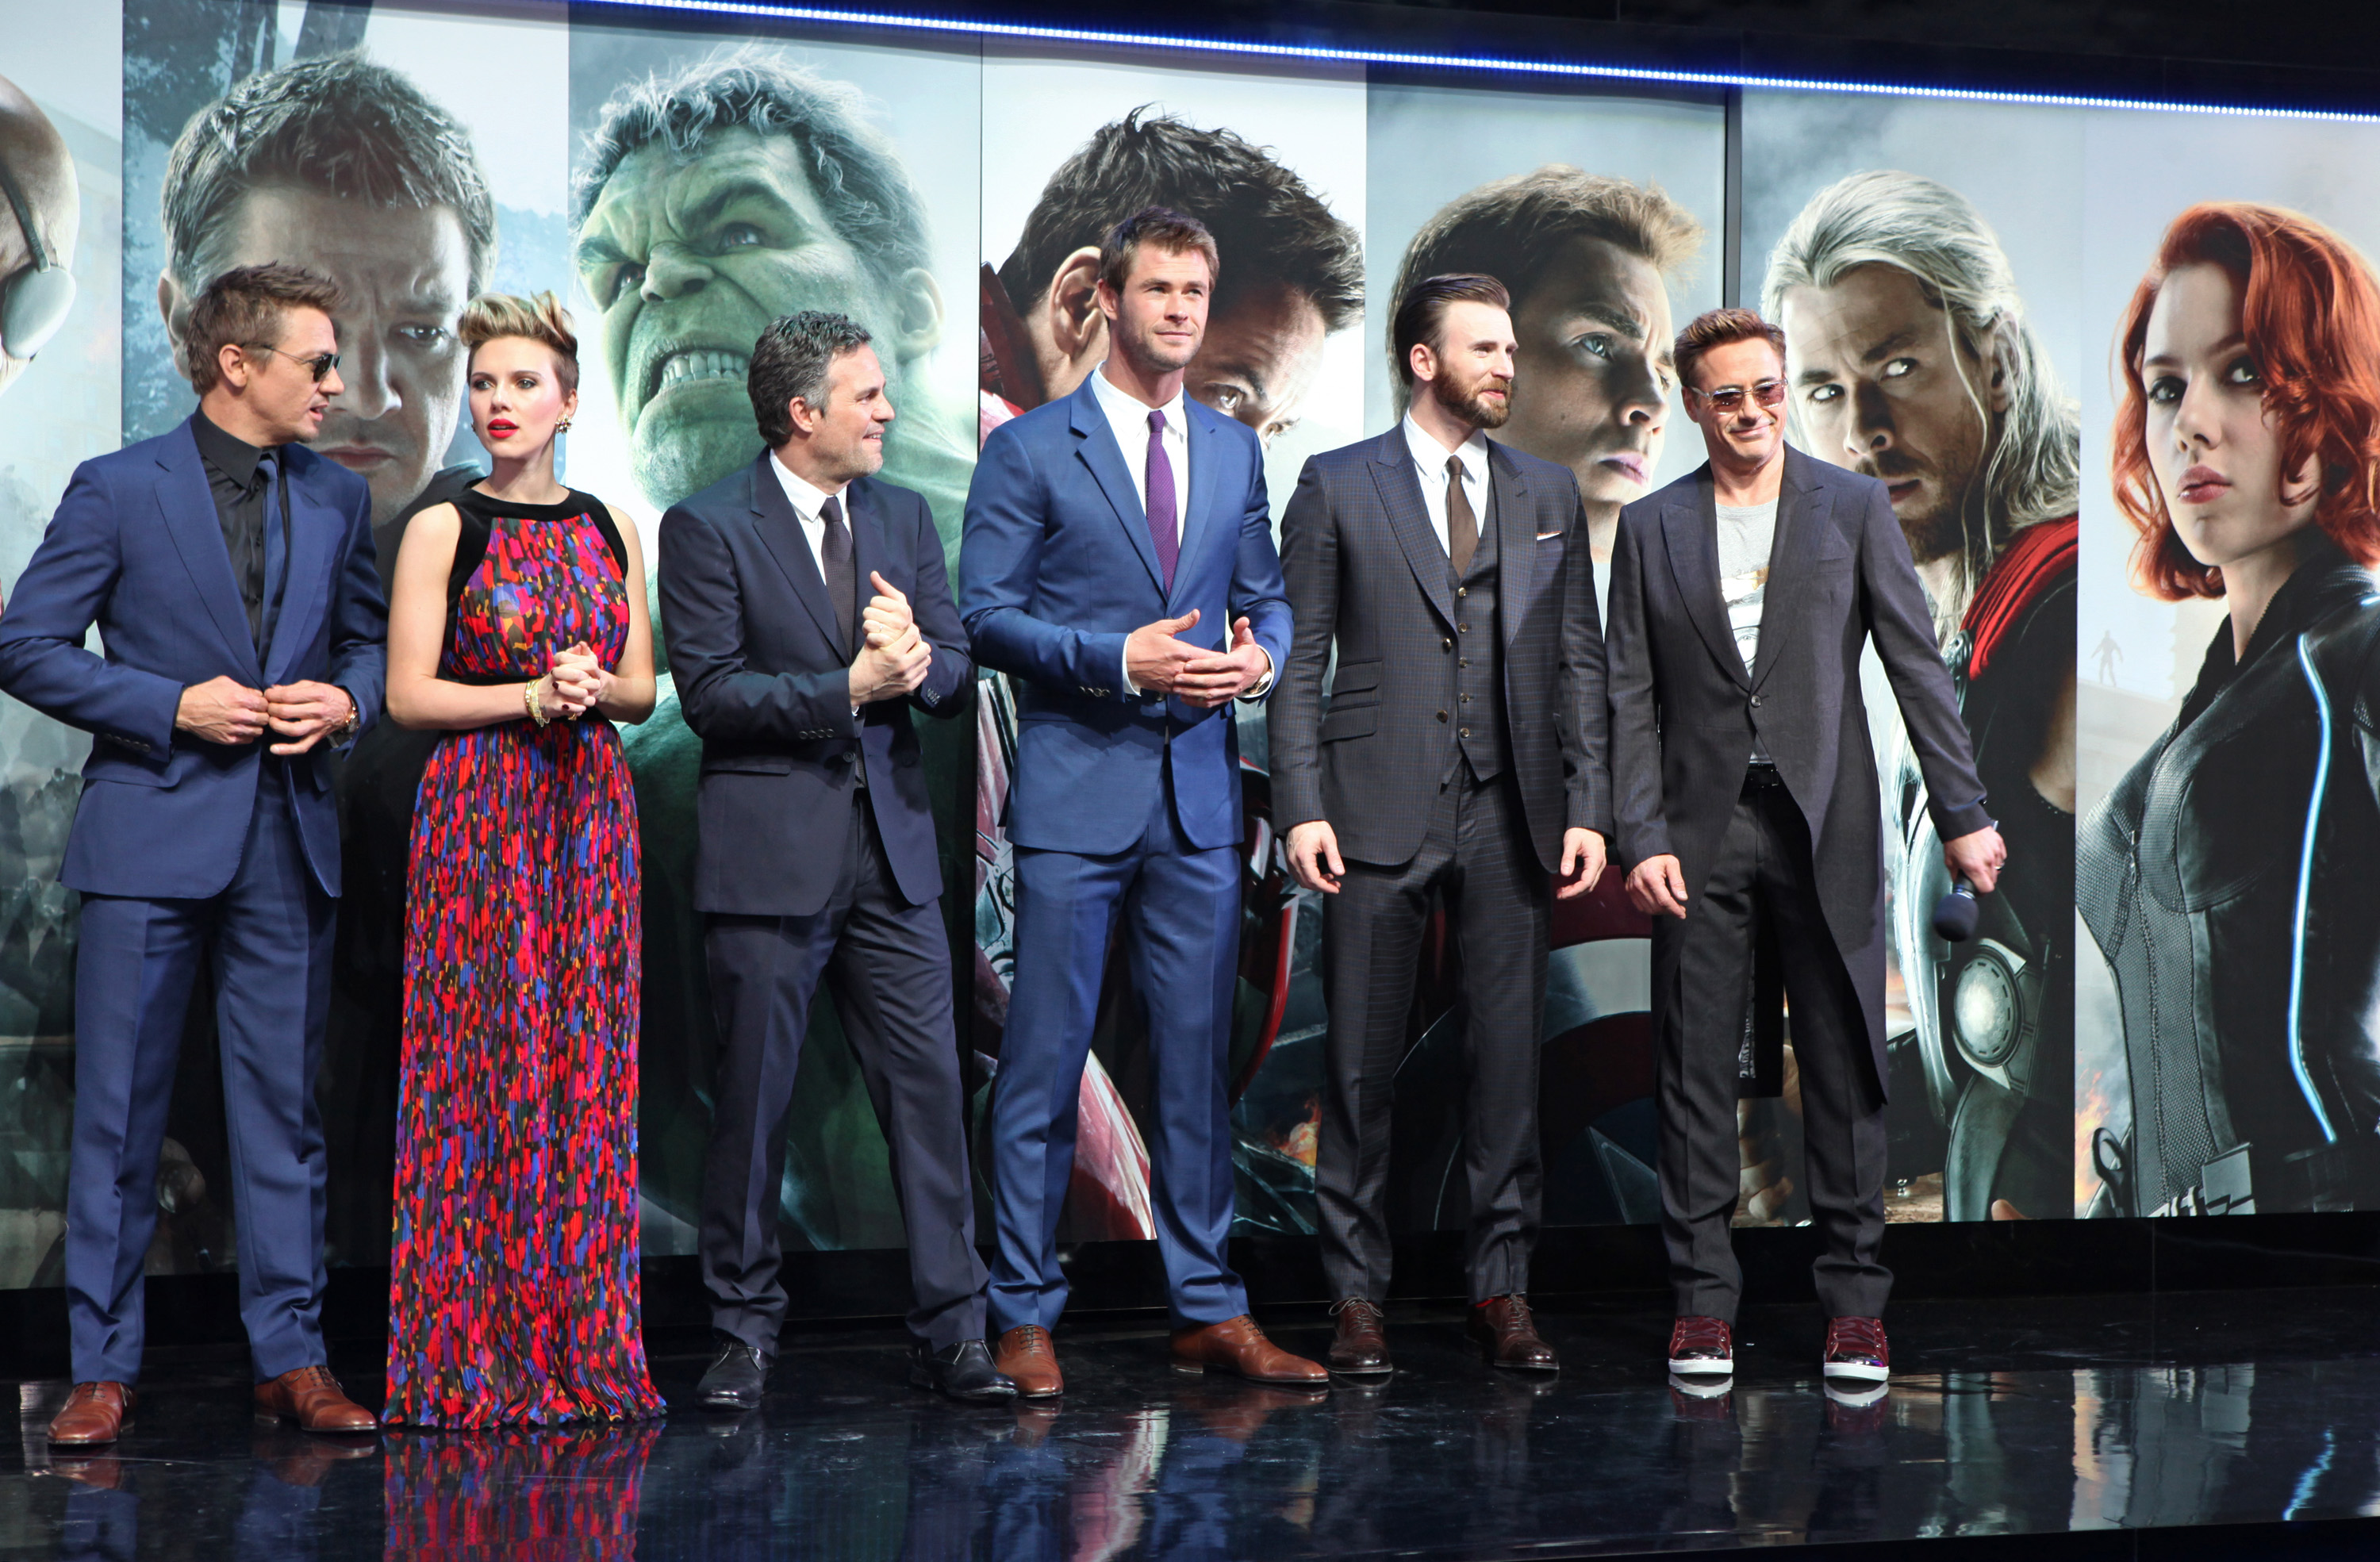 Marvel's Avengers: Infinity War Cast Fashion